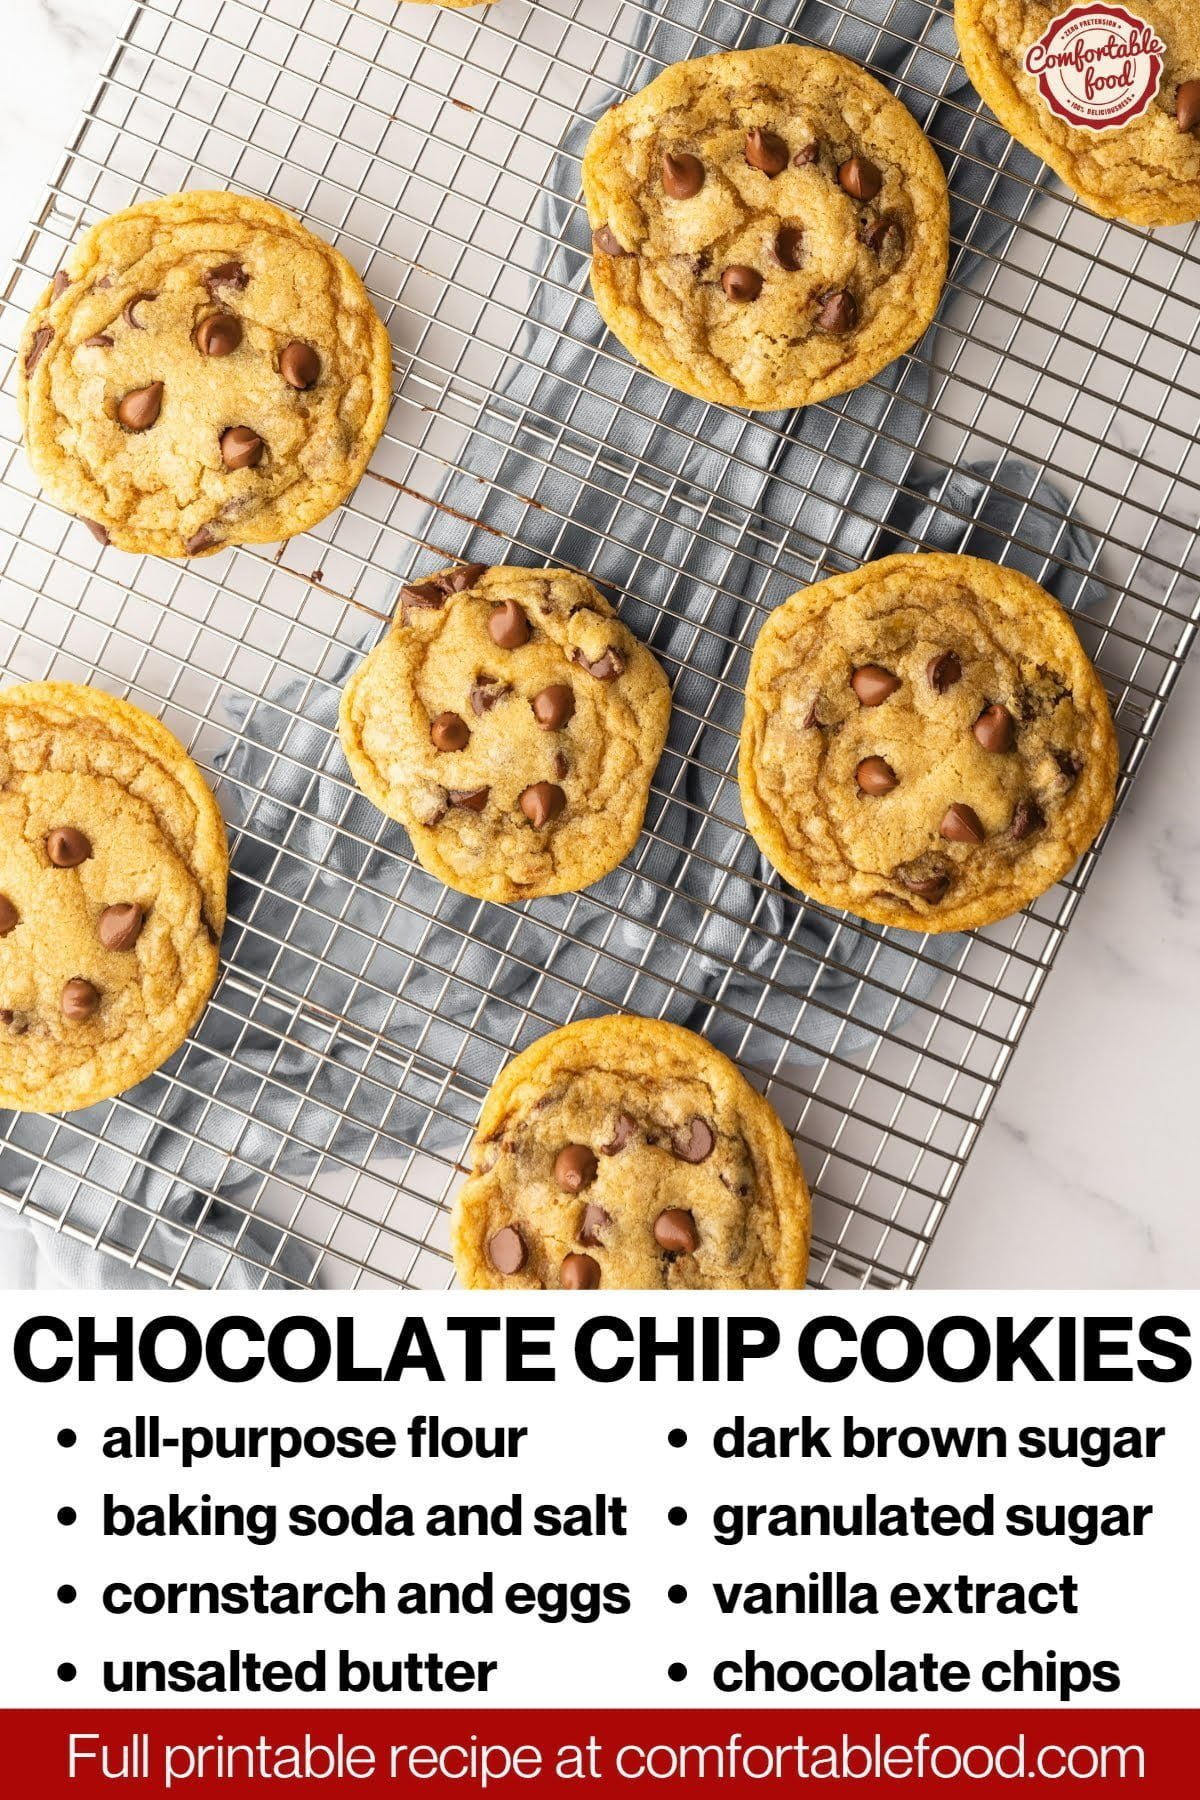 Chocolate chip cookies - socials